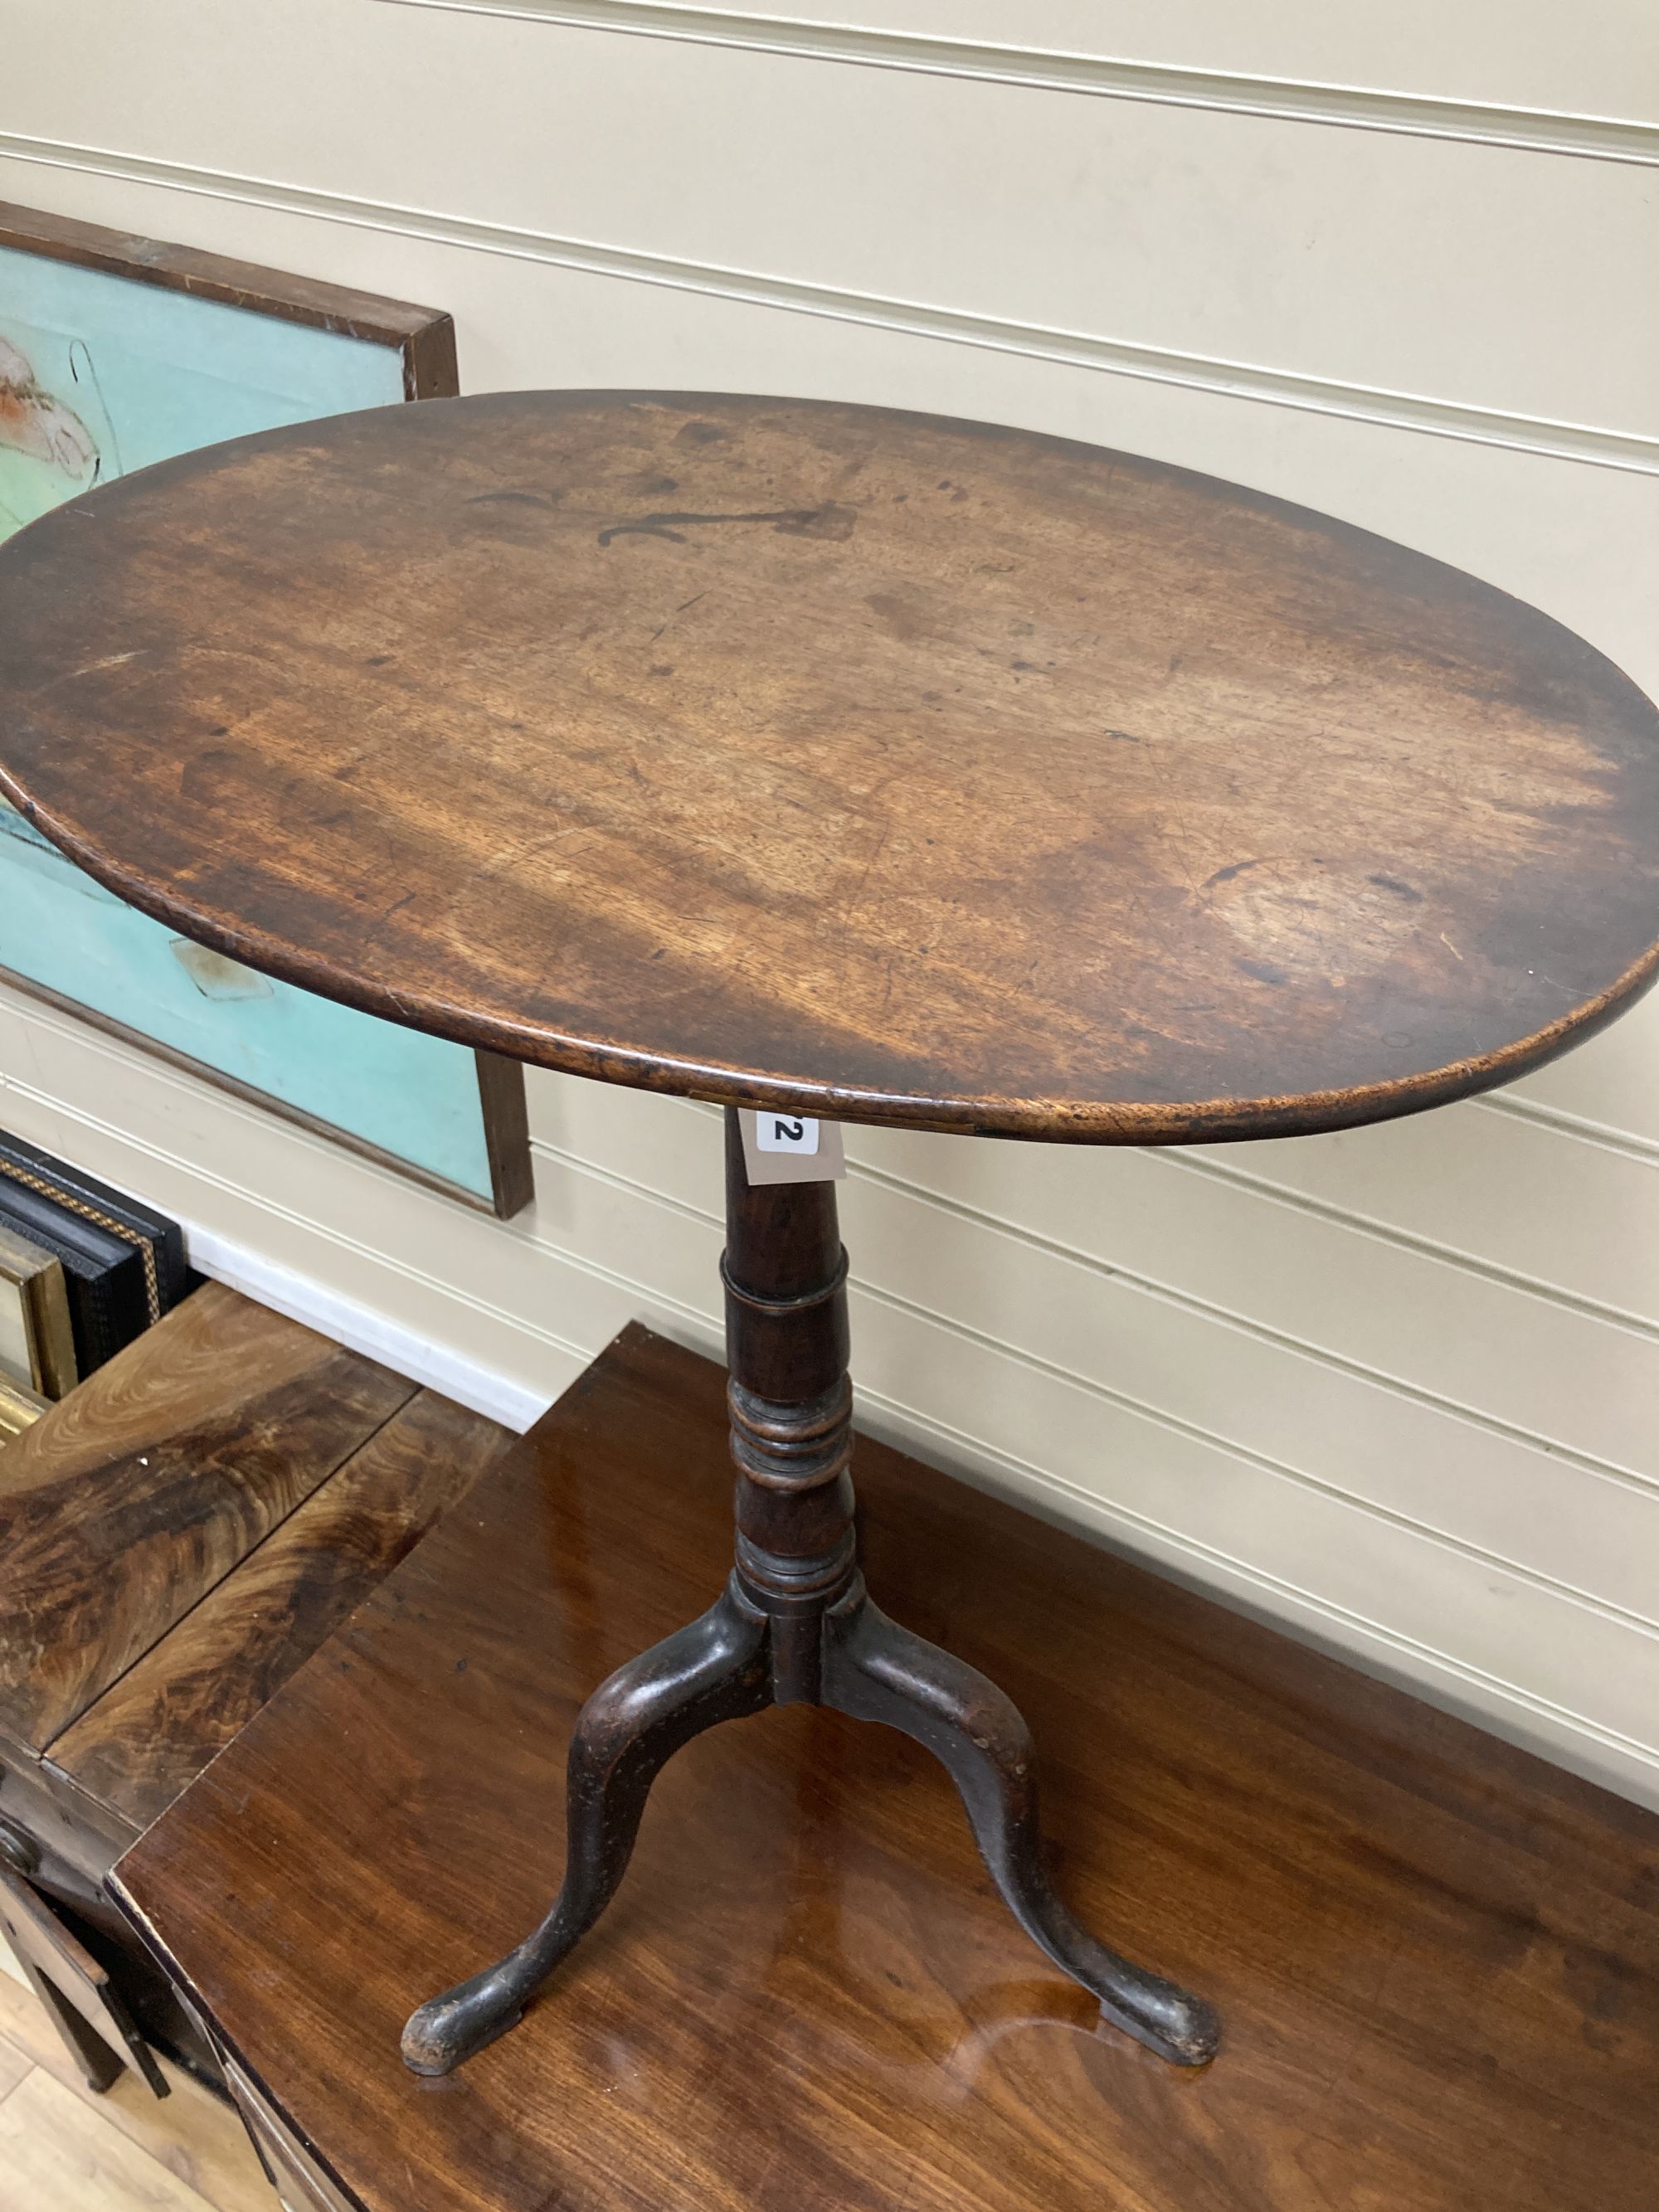 A 19th century mahogany oval tripod wine table, width 54cm, depth 40cm, height 70cm